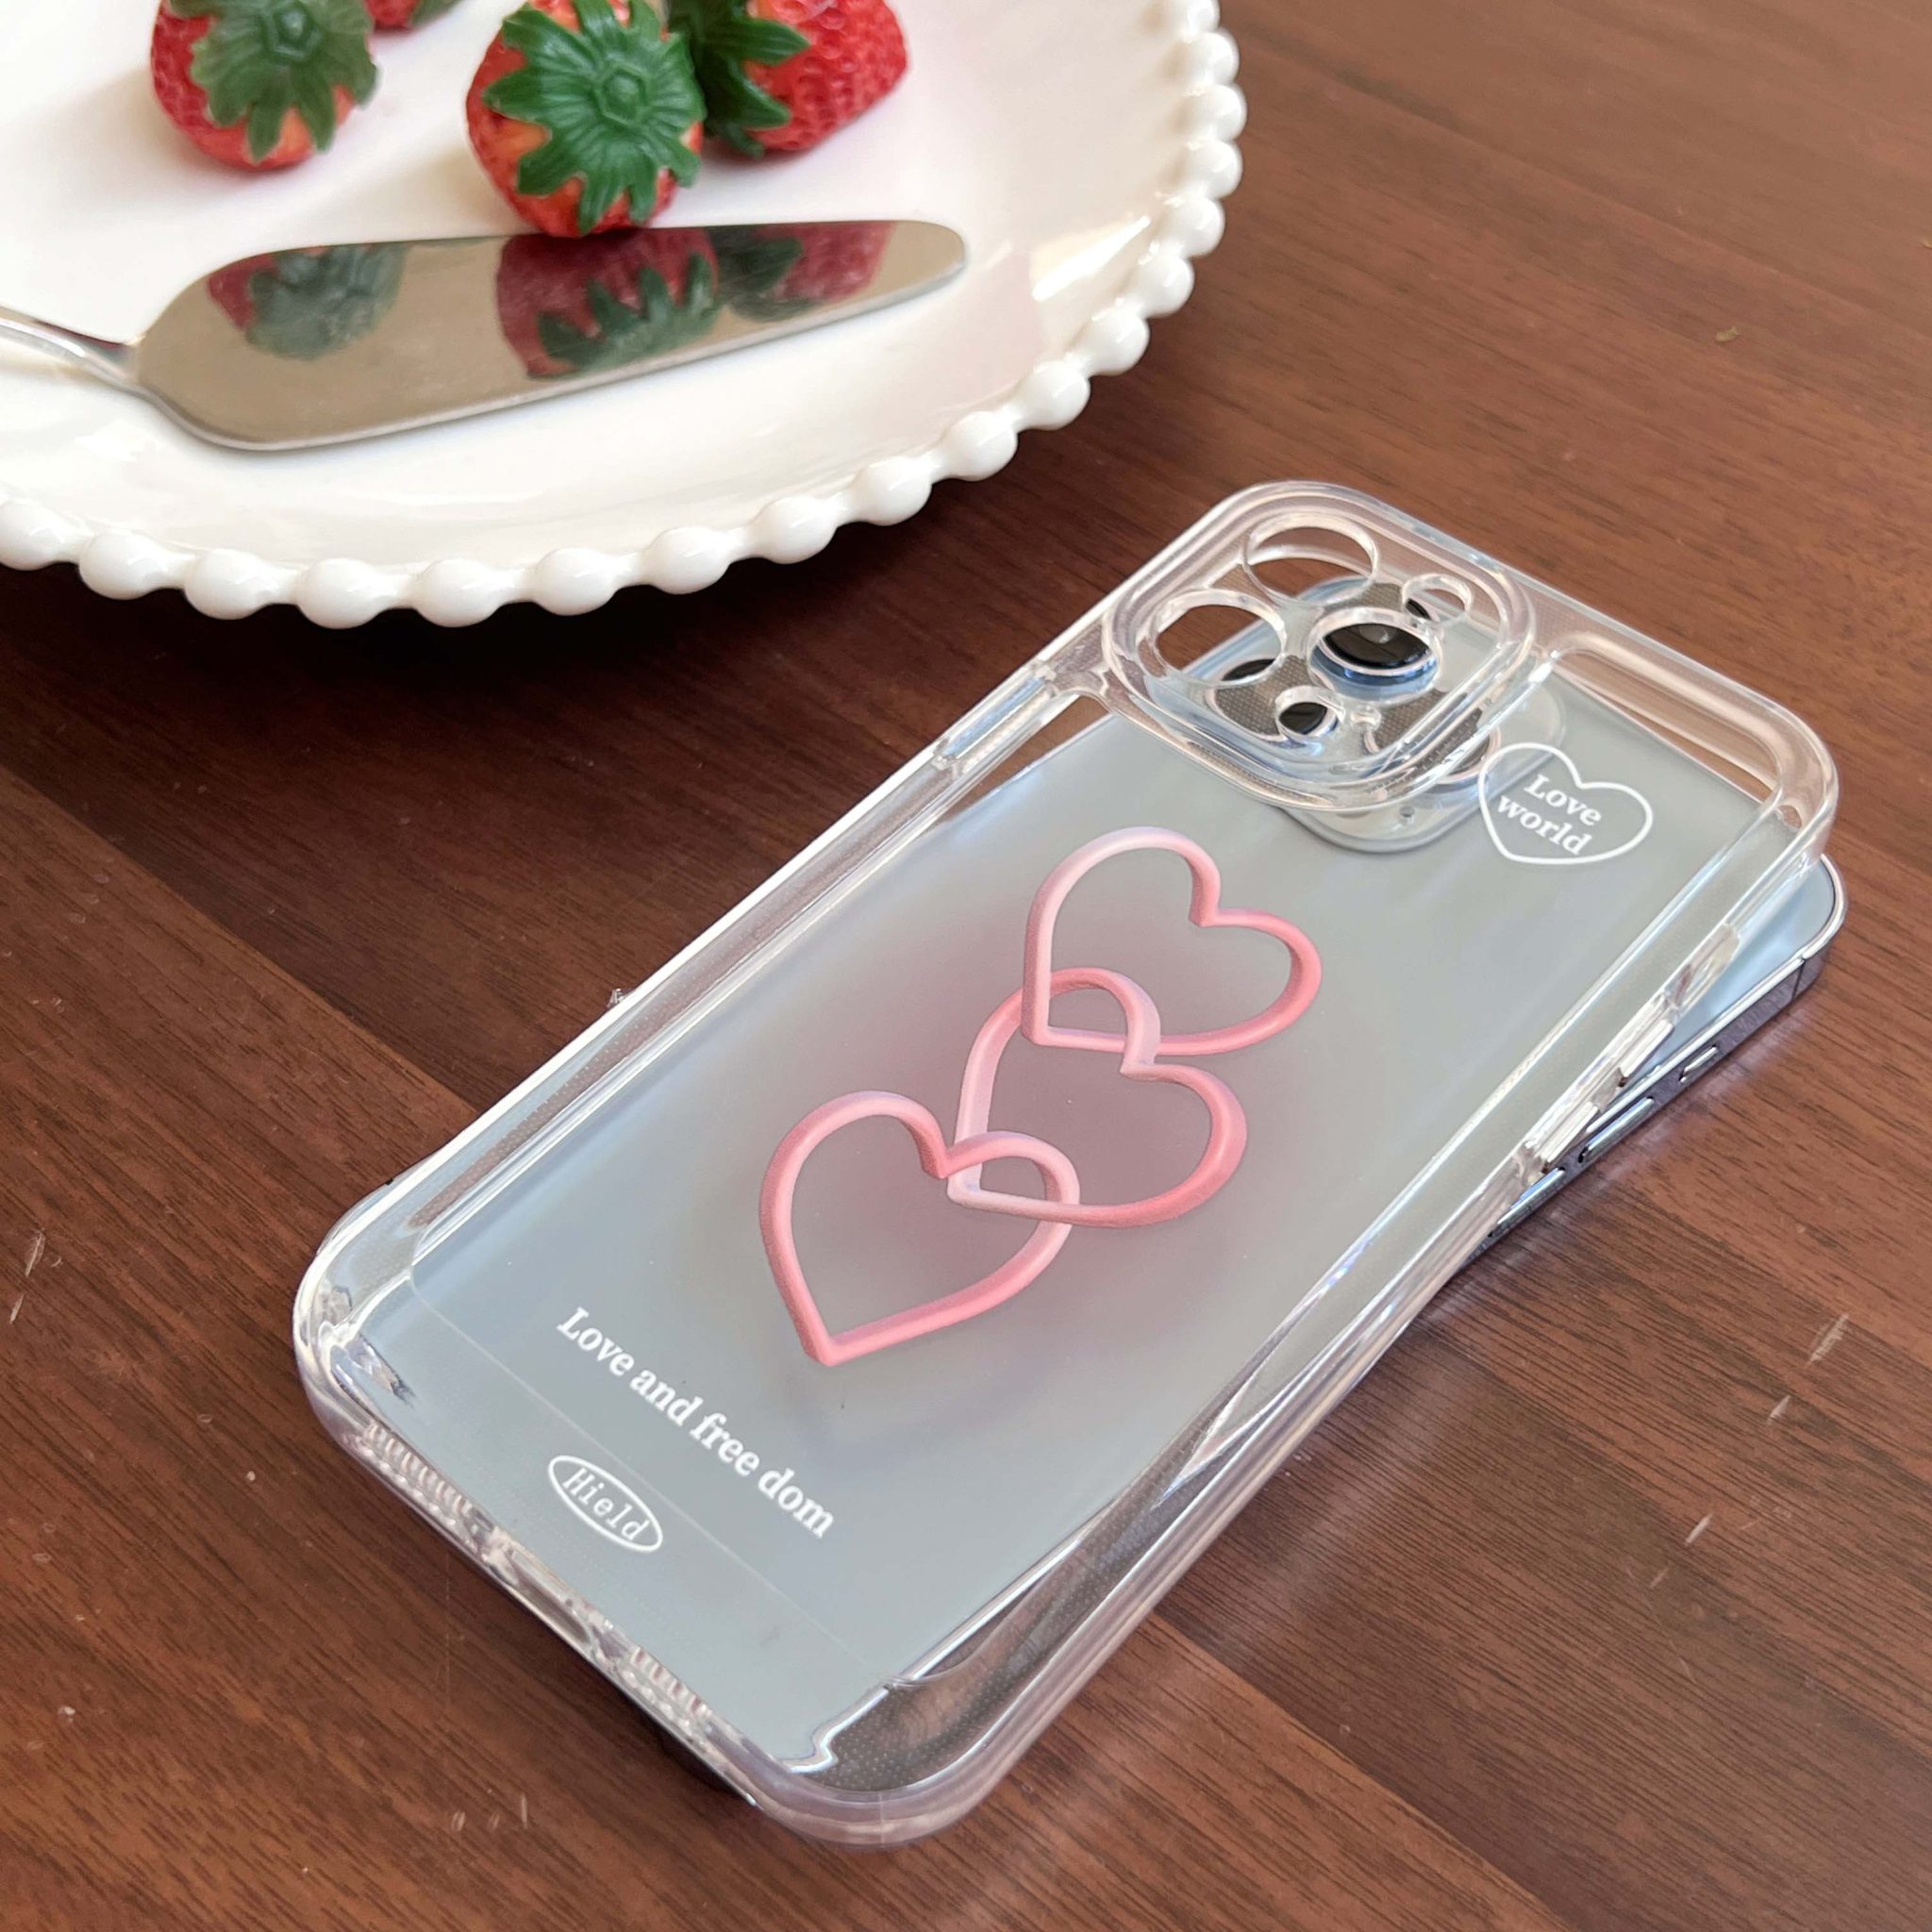 Three Hearts iPhone Case - ZiCASE